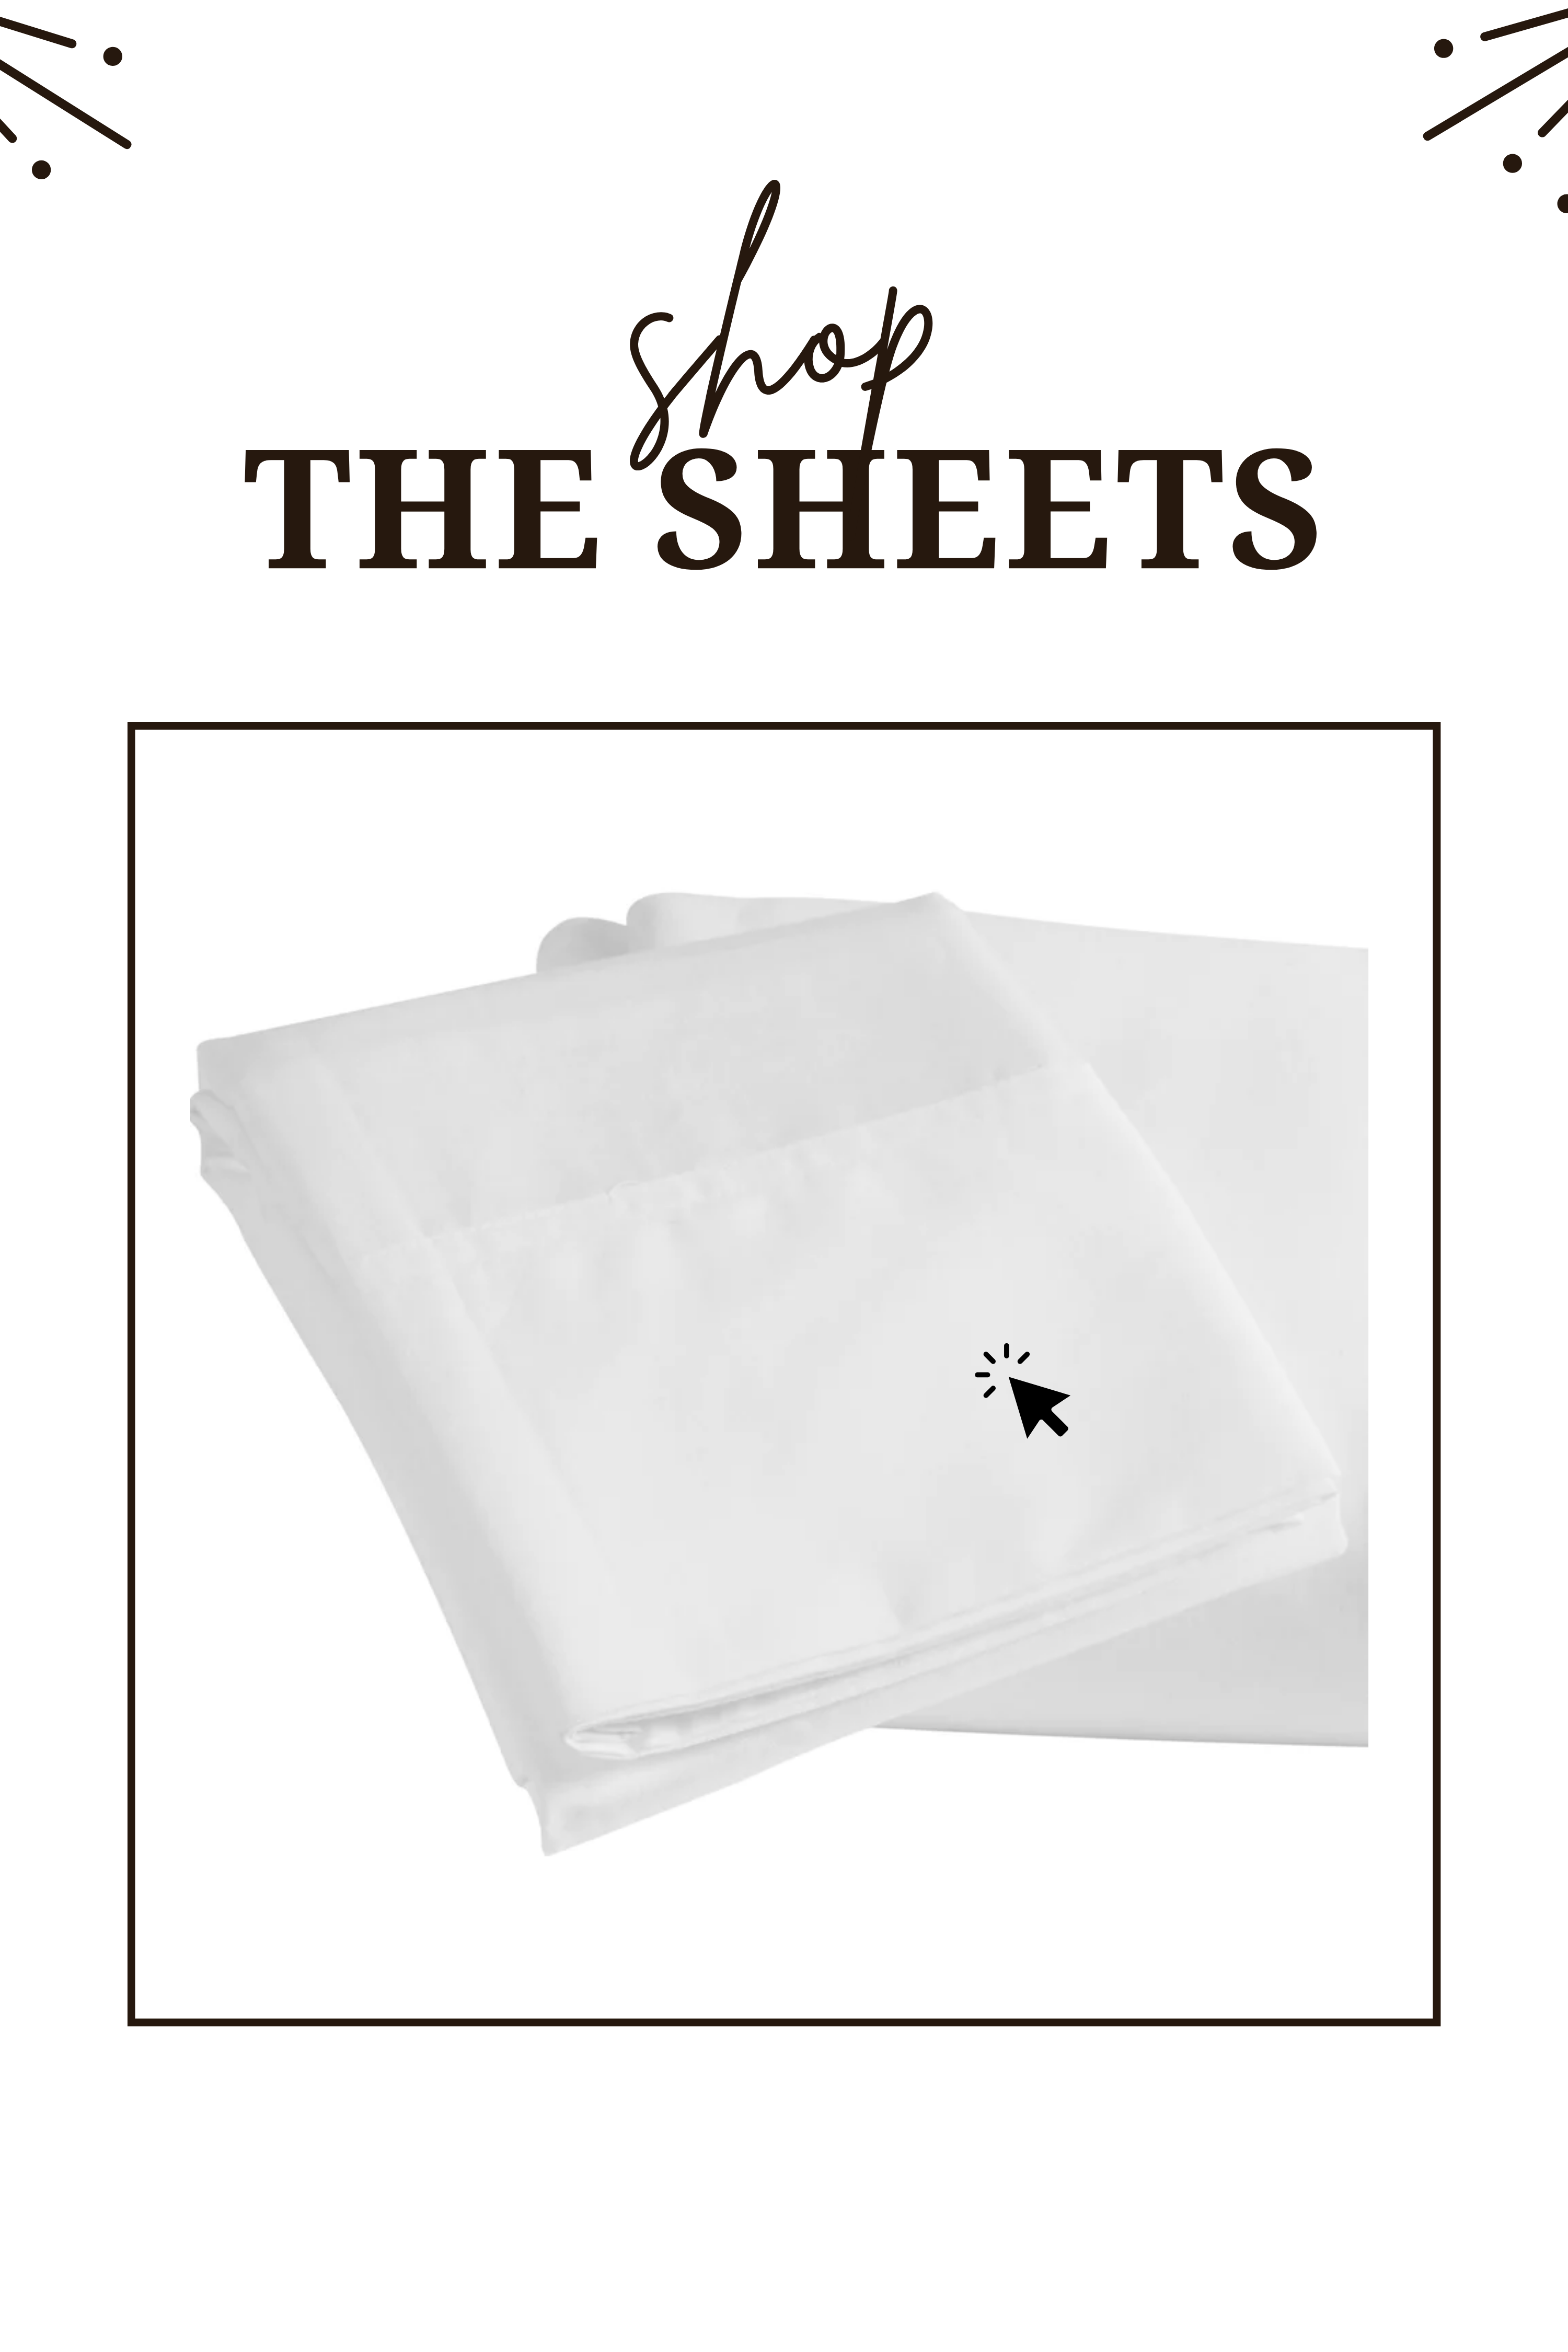 Shop sheets pillows.com